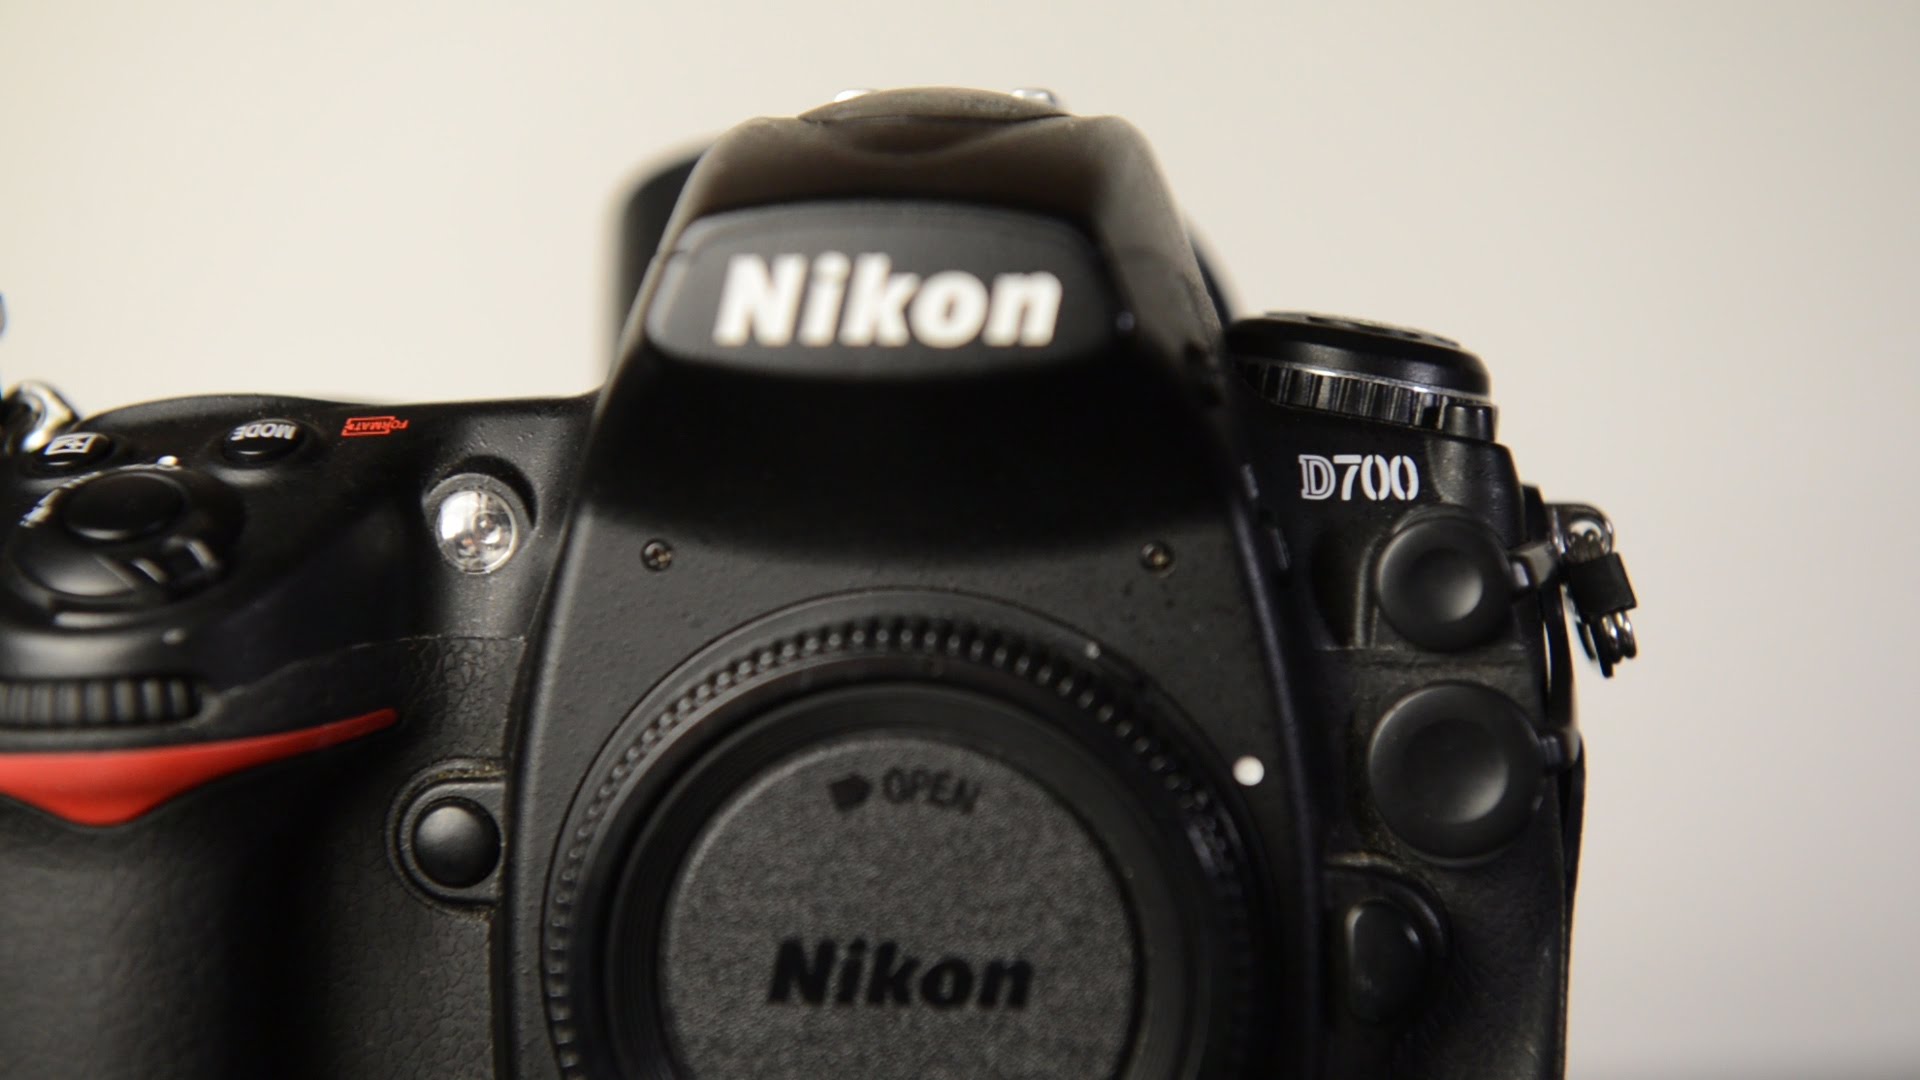 Nikon D700 Review: Nikon’s Best FX Camera Still Good For 2016?